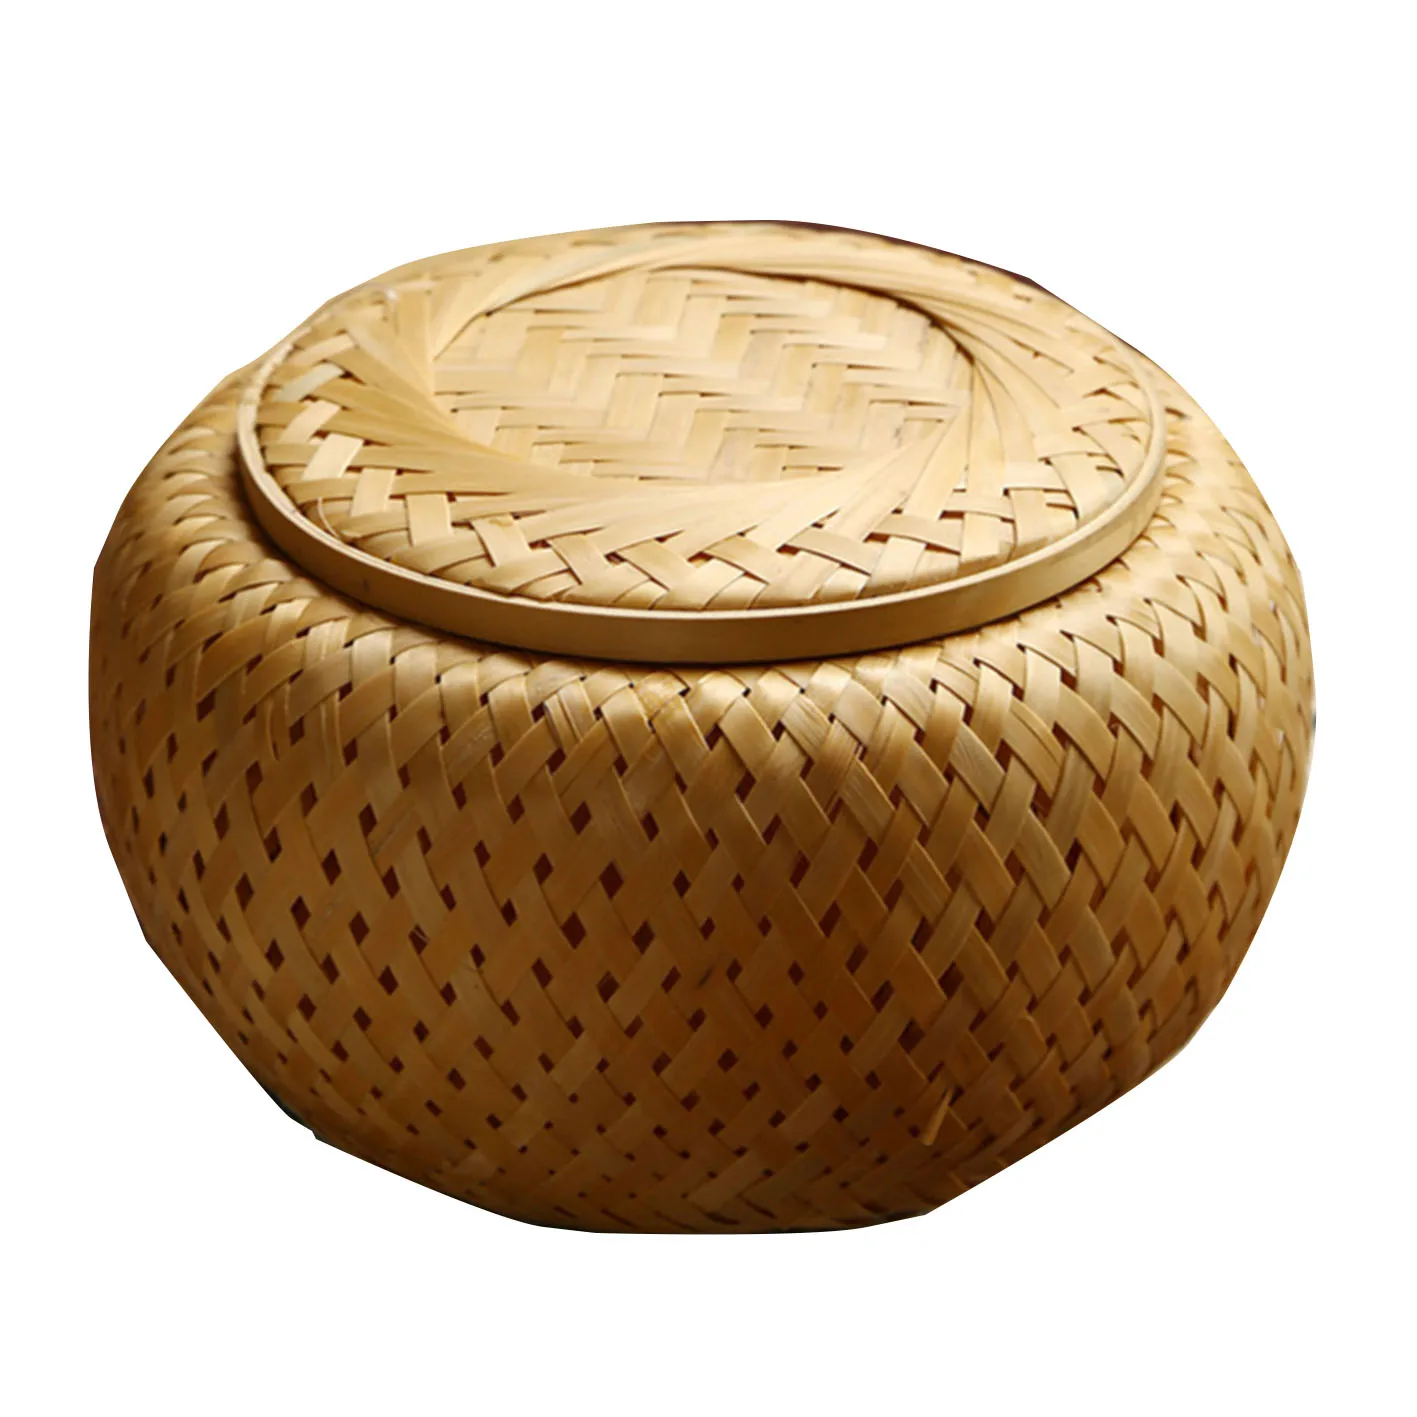 Бамбуковая плетеная чайная коробка ручная бамбуковая для хранения чая банка